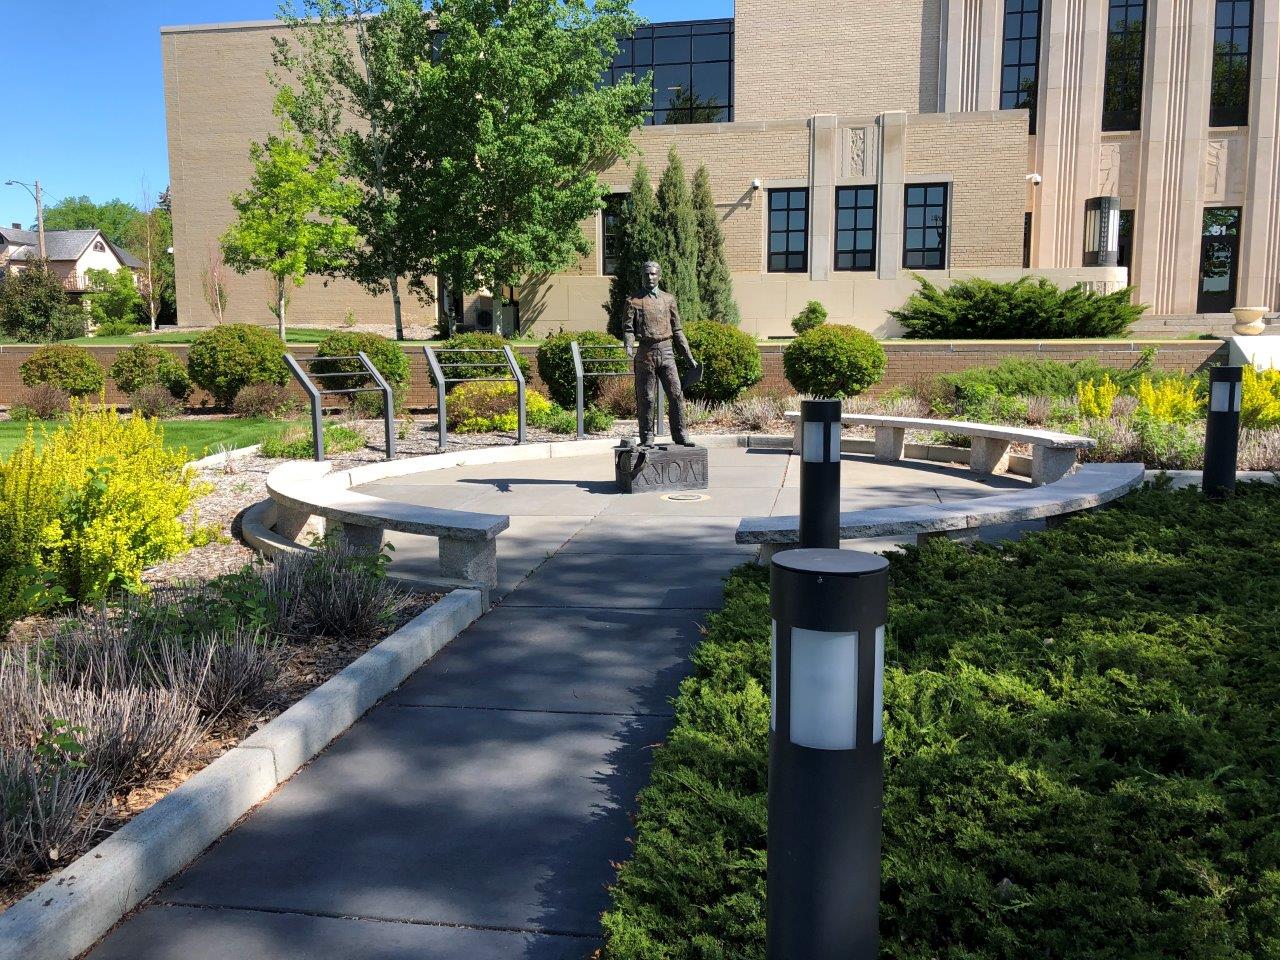 Theodore Roosevelt statue in Dickinson, North Dakota